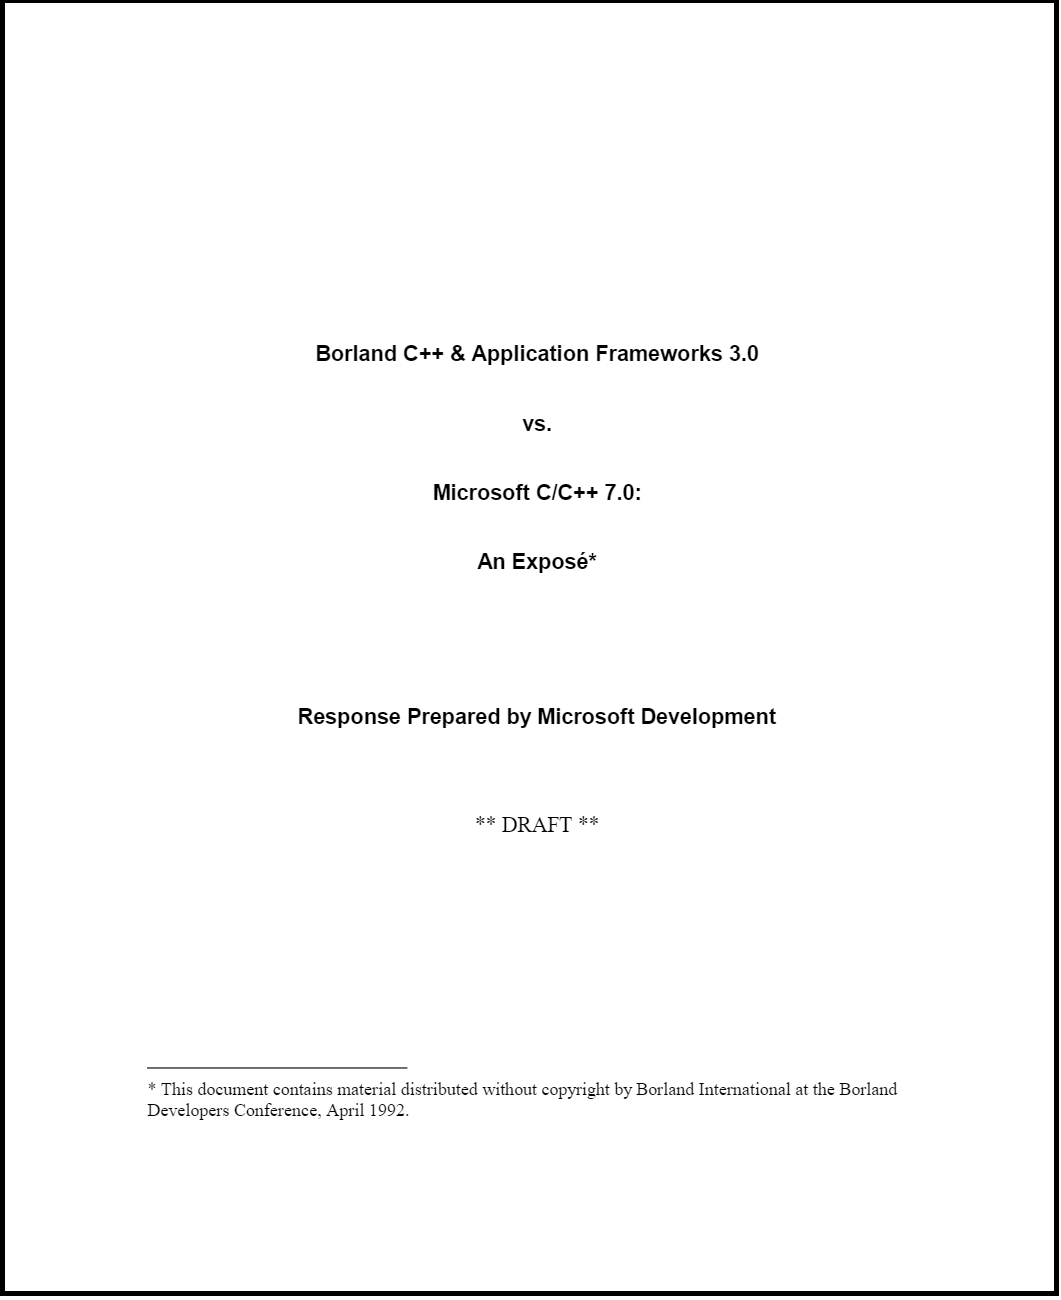 First page of a whitepaper "Borland C++ vs. Microsoft C++ 7.0" Response Prepared by Microsoft Development **Draft**.